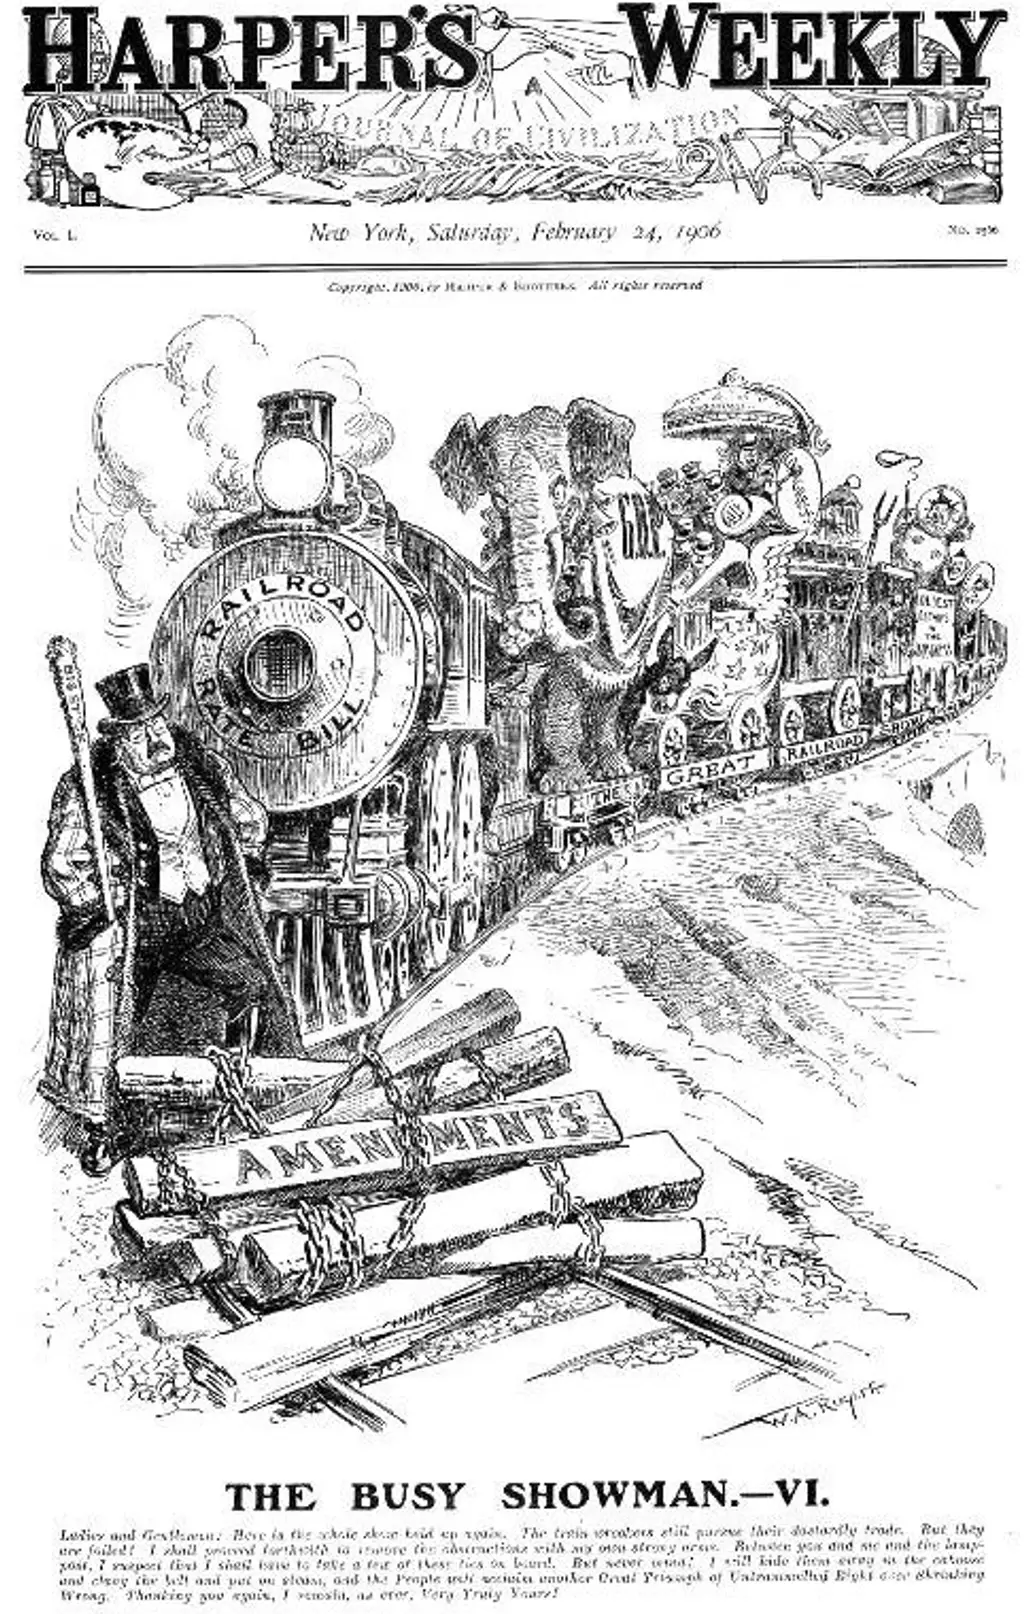 Regulation of the Railroads